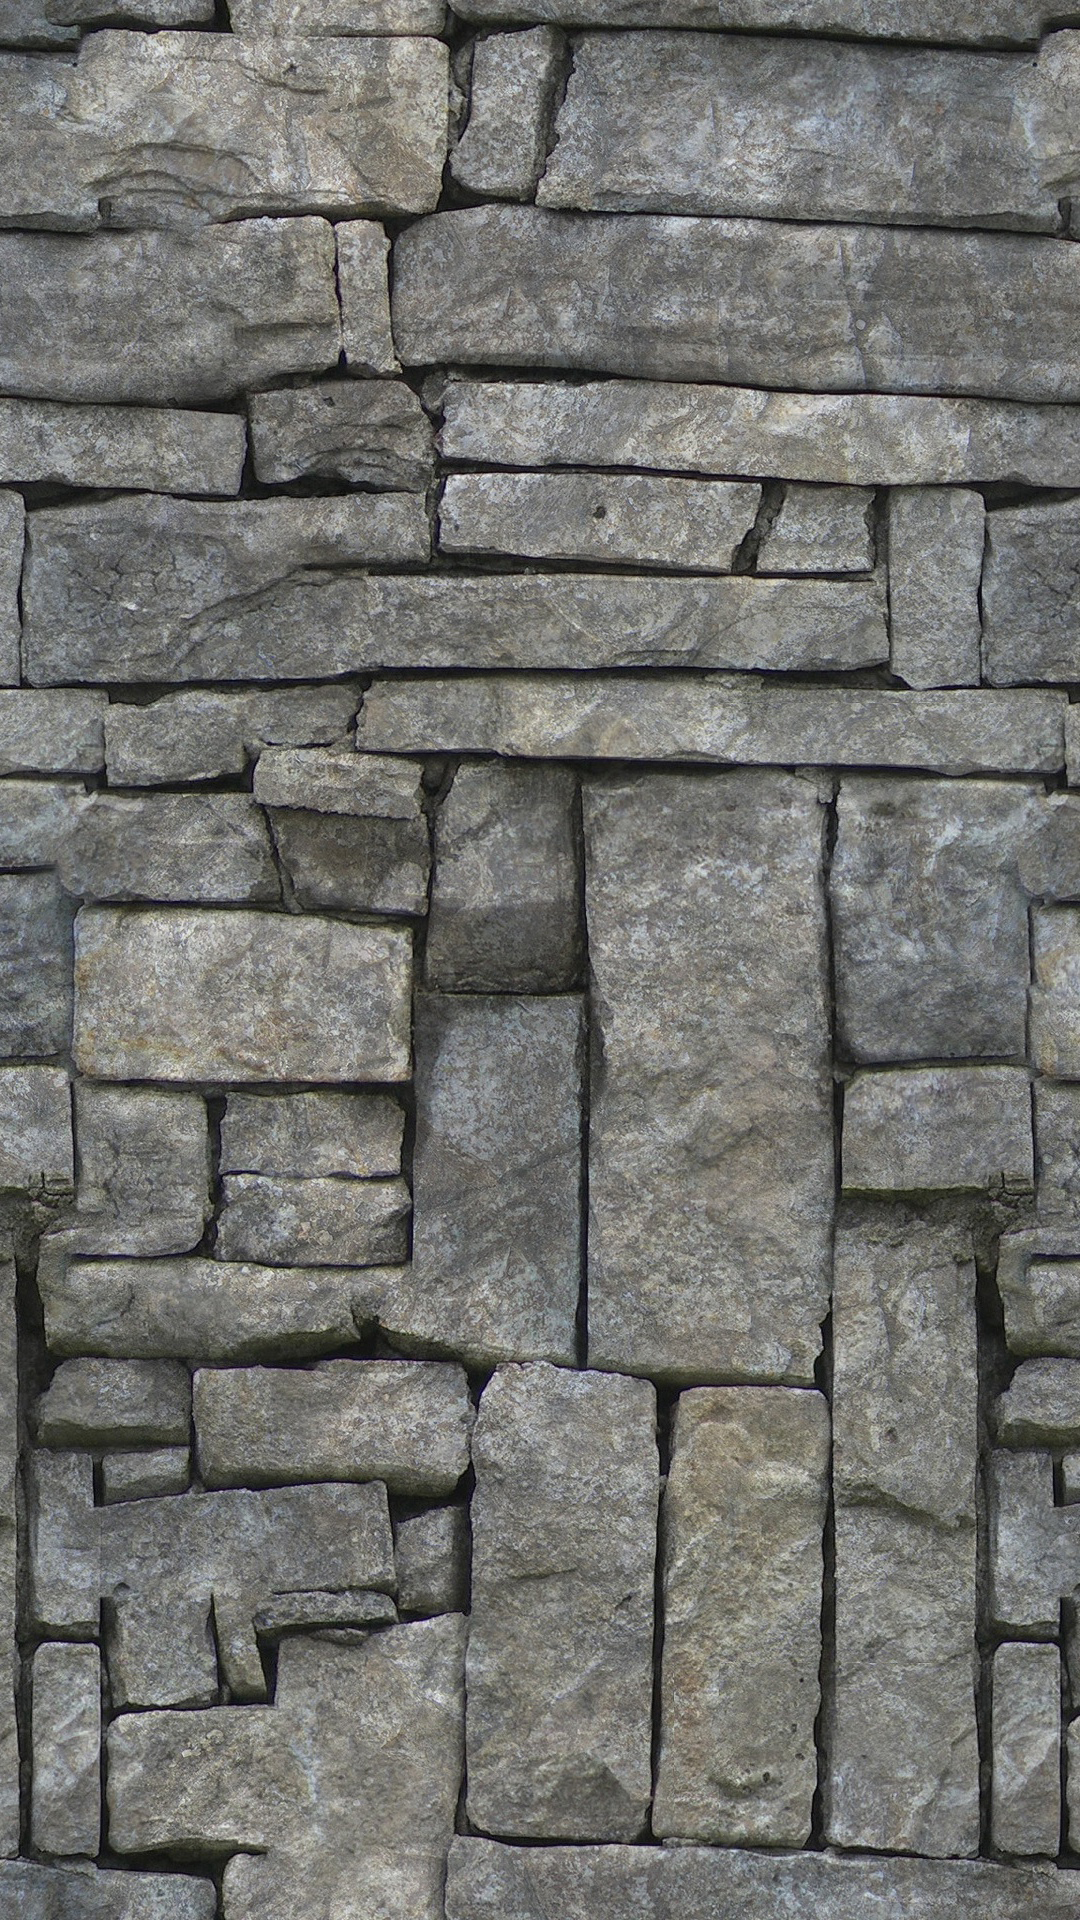 texture wallpaper for walls,wall,brickwork,stone wall,brick,rock